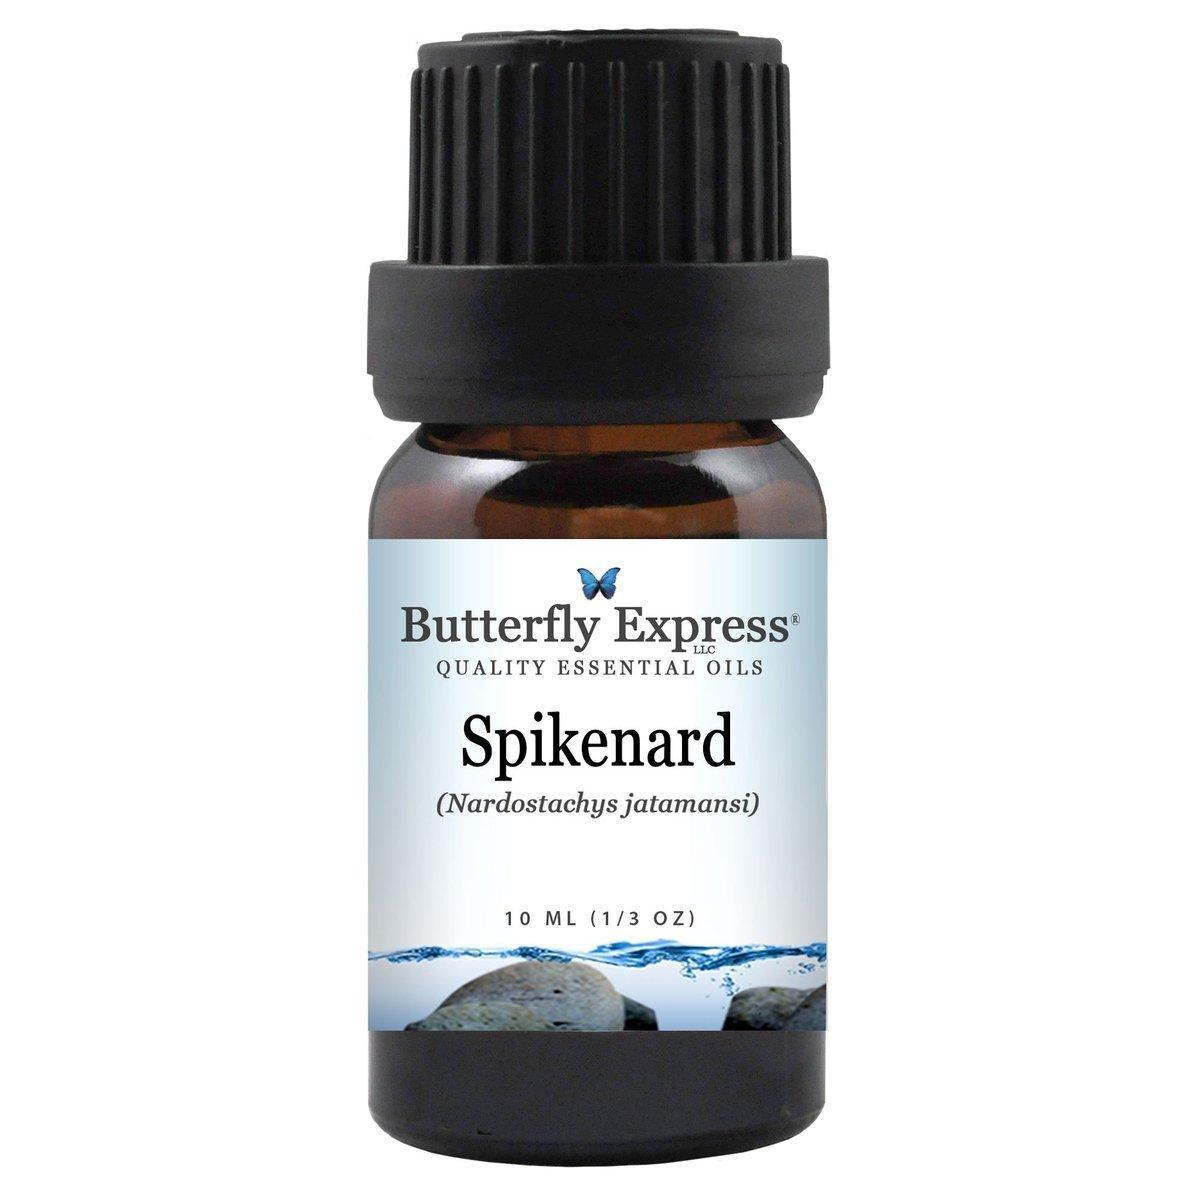 Spikenard essential oils